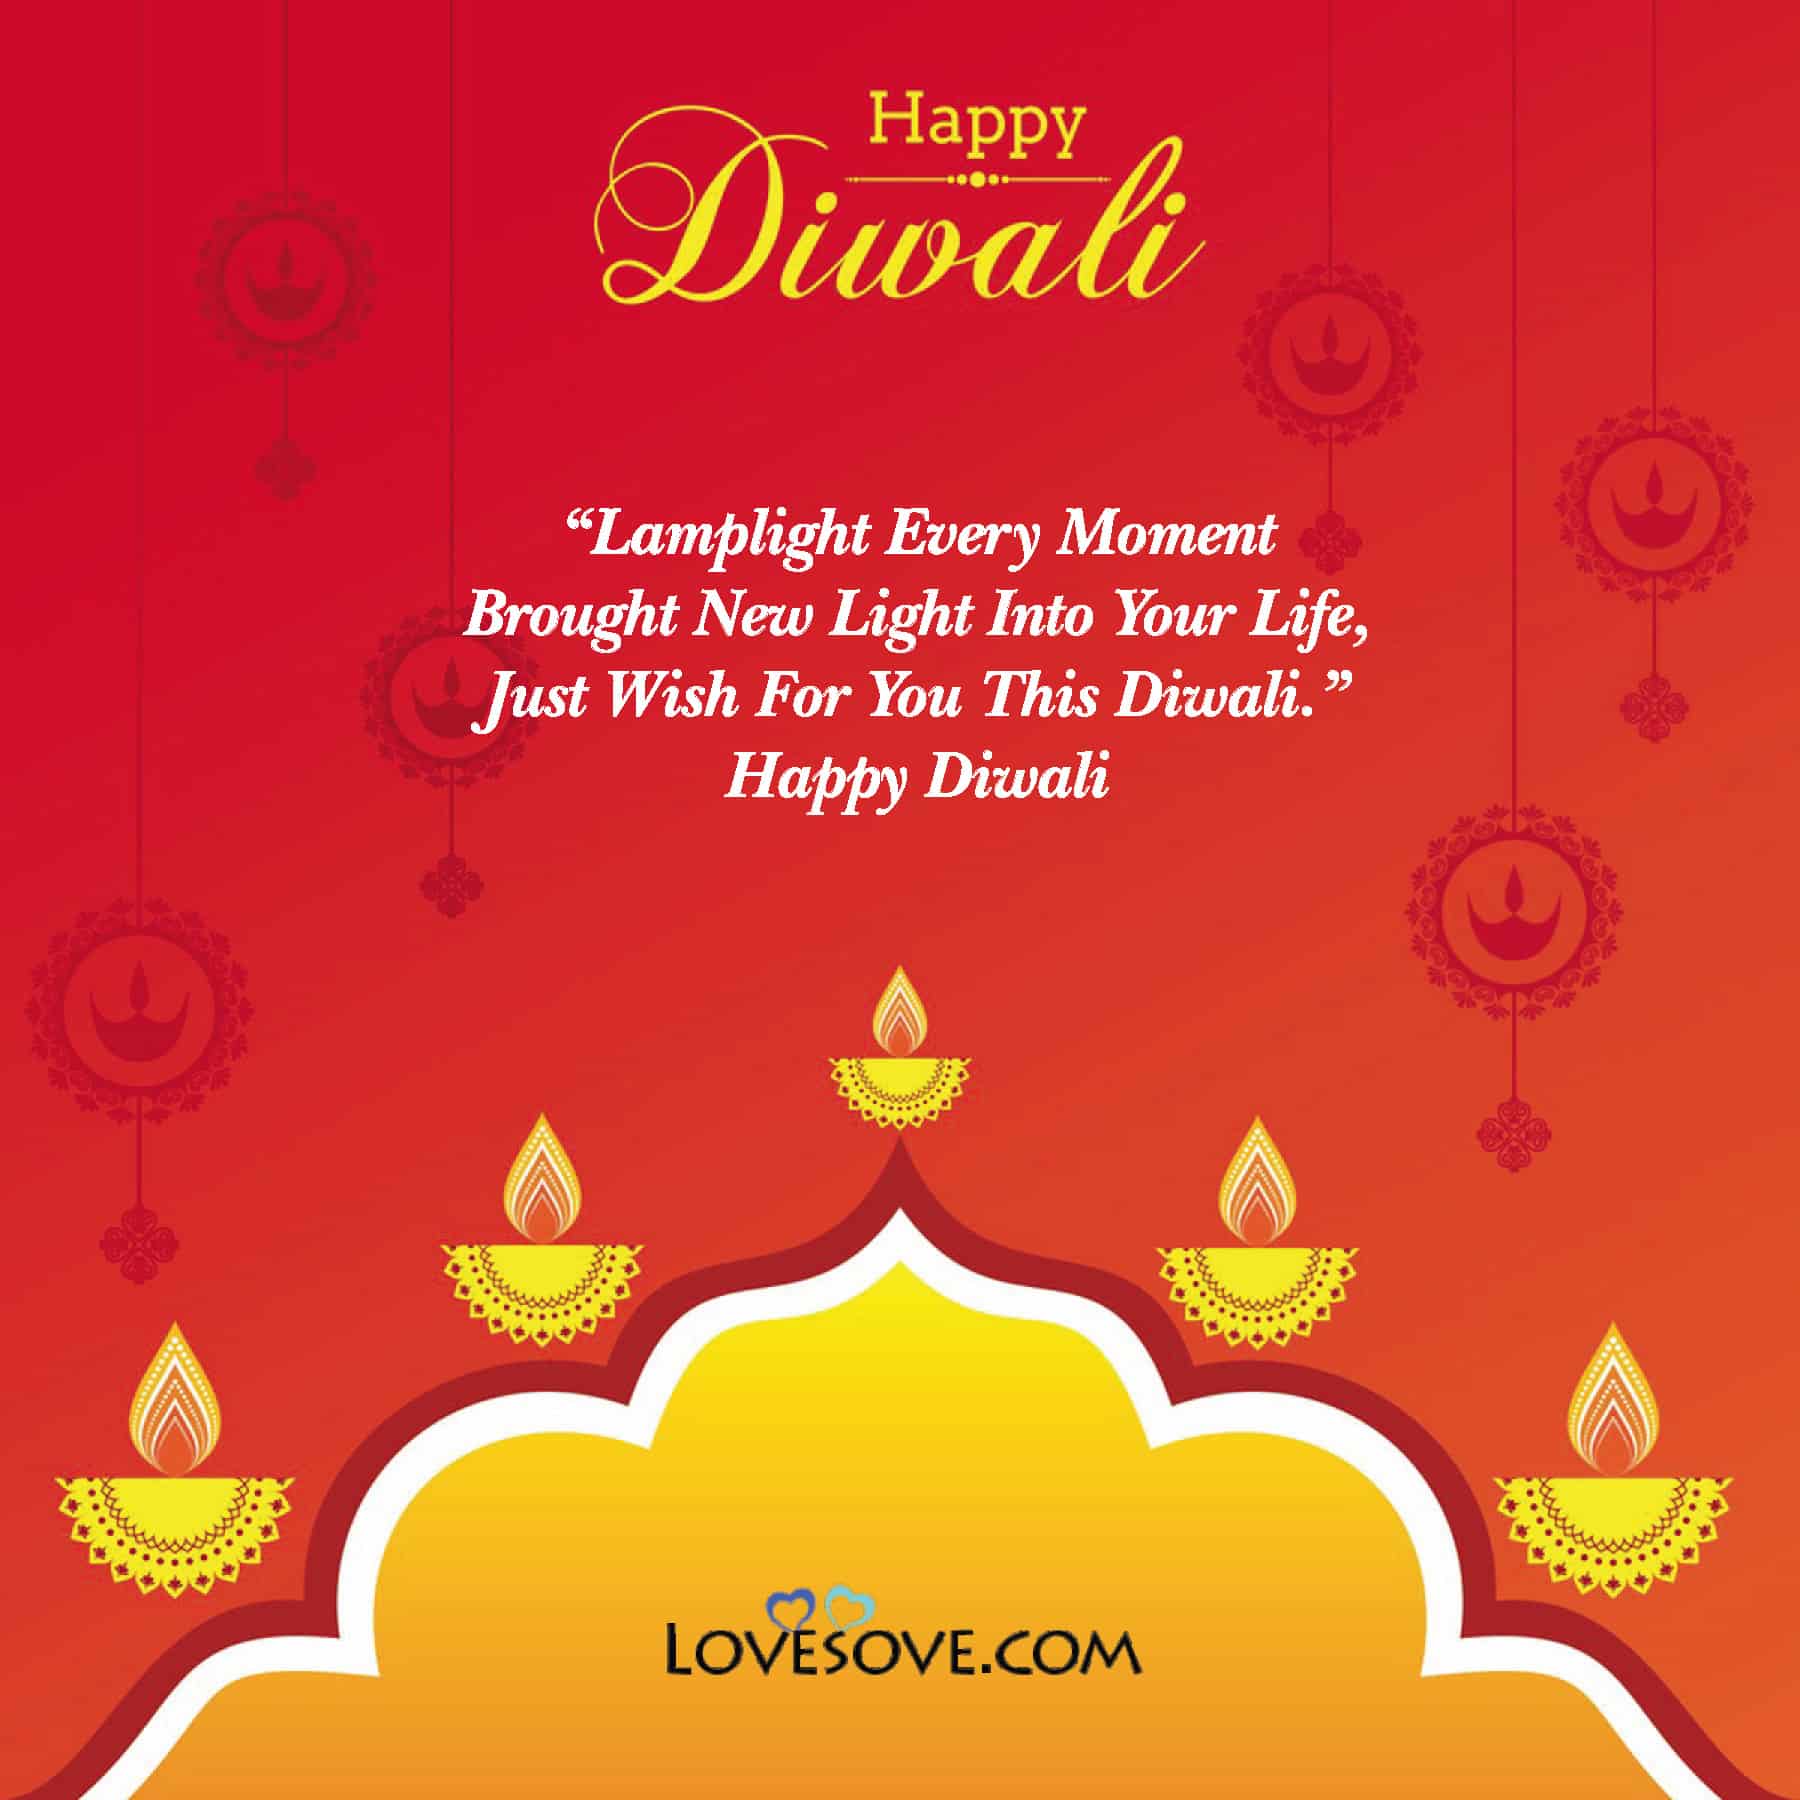 unique diwali greetings images, diwali greetings and images, diwali romantic greetings, diwali greetings hd images download,